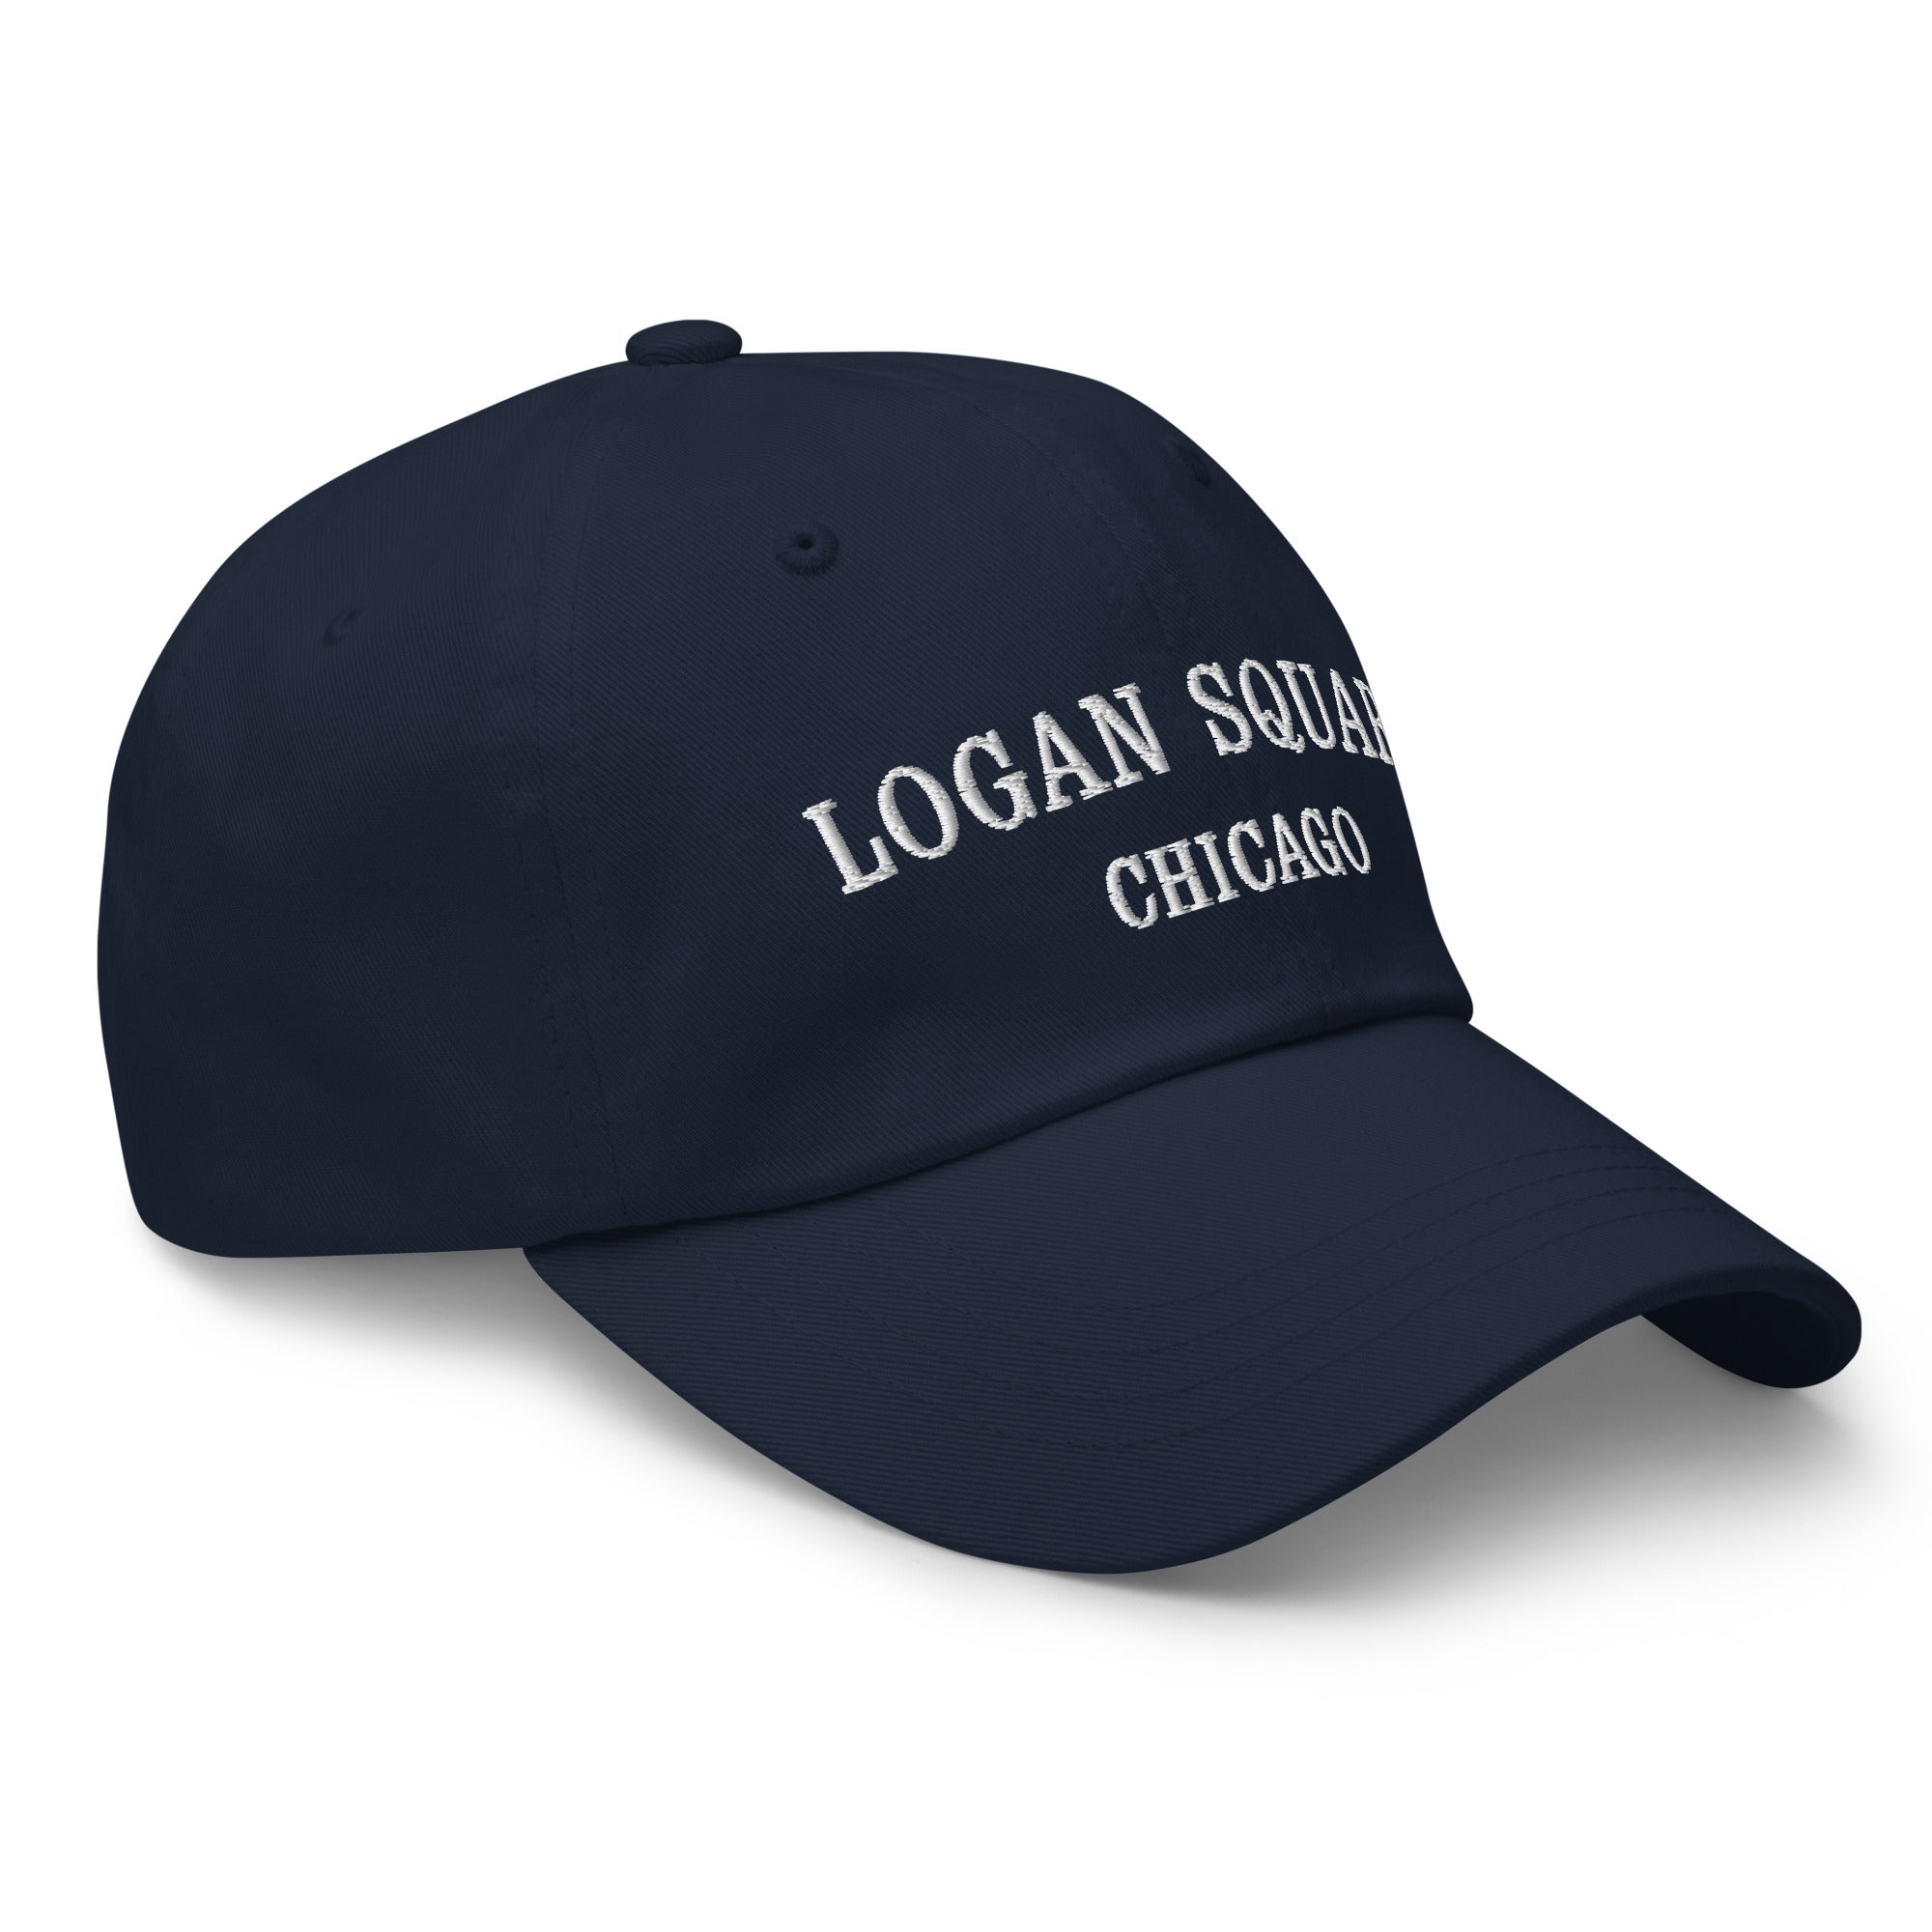 Logan Square Chicago Dad Hat - White Stitching